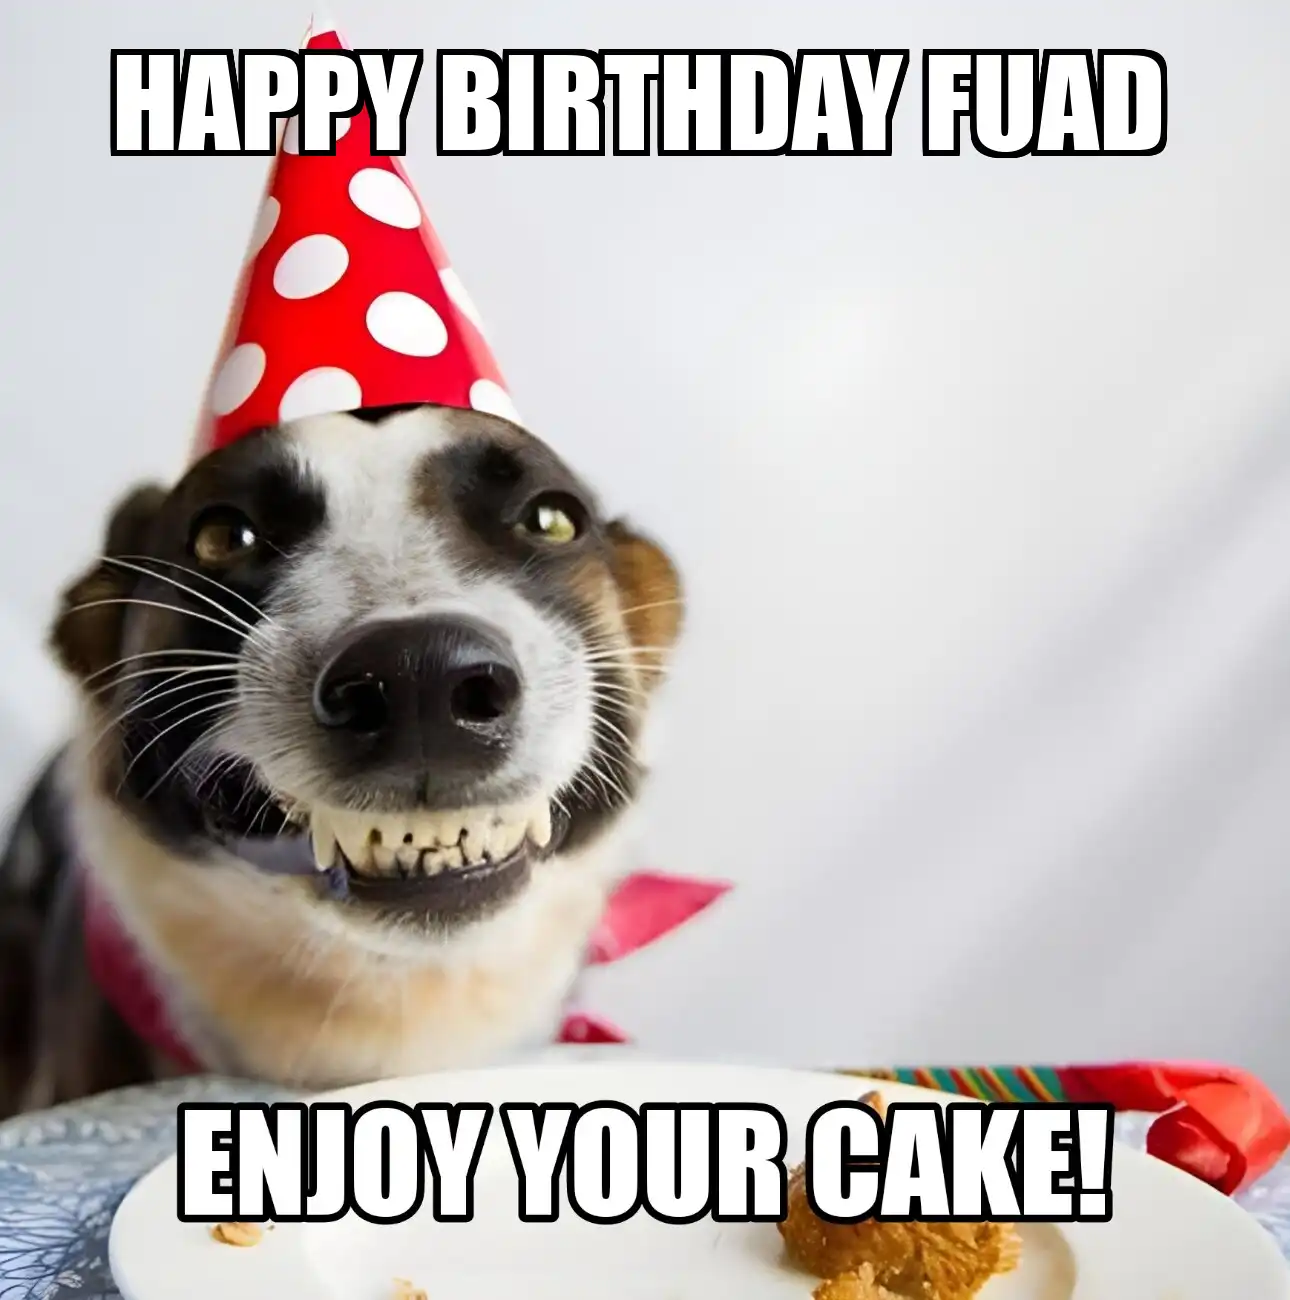 Happy Birthday Fuad Enjoy Your Cake Dog Meme